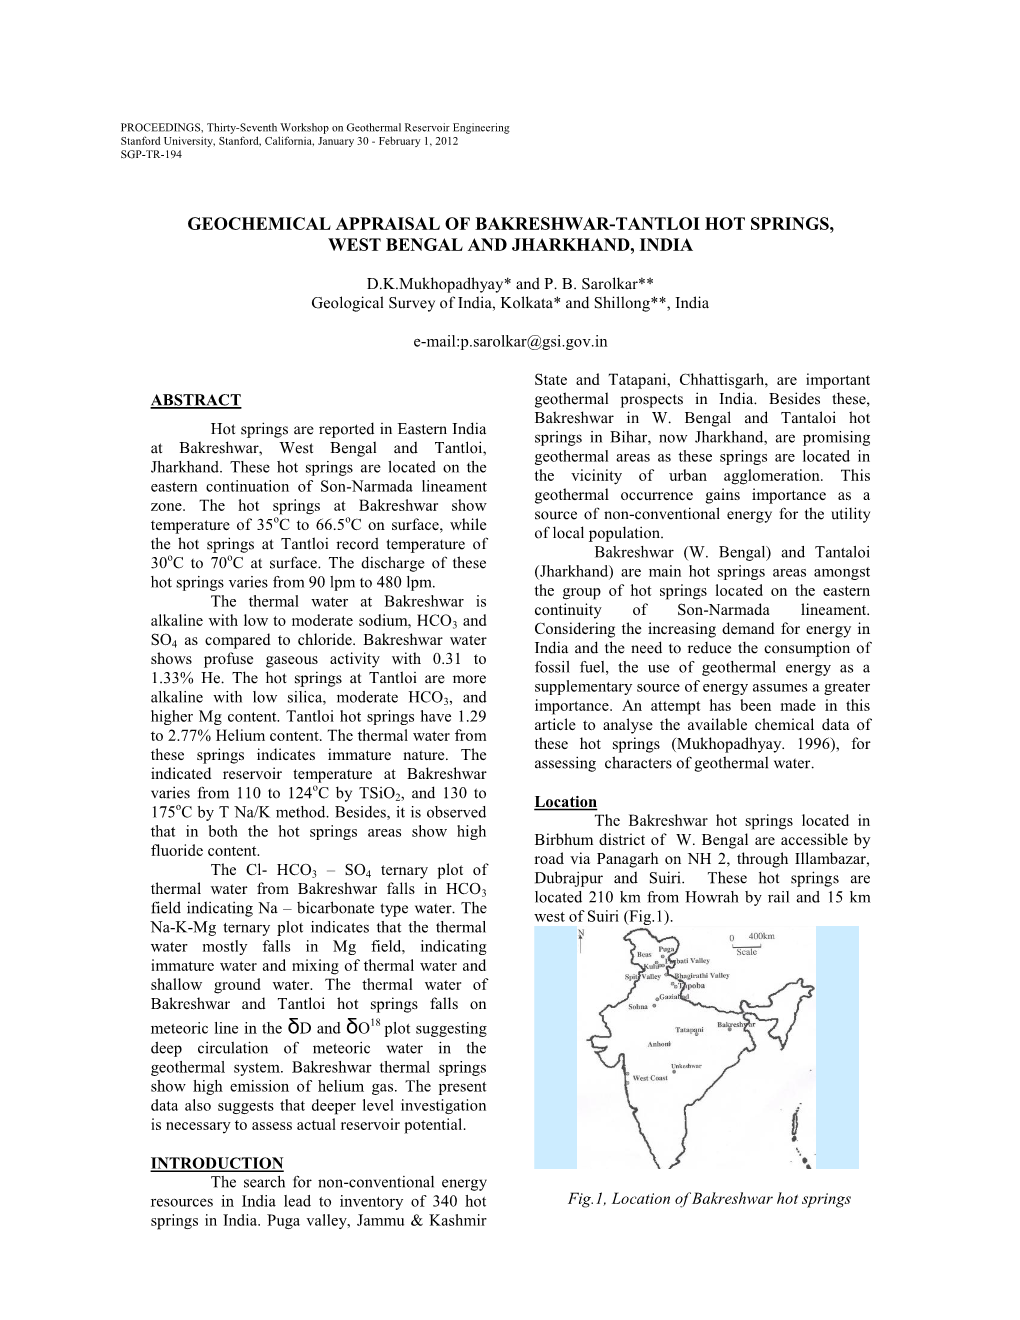 Geochemical Appraisal of Bakreshwar-Tantloi Hot Springs of West Bengal